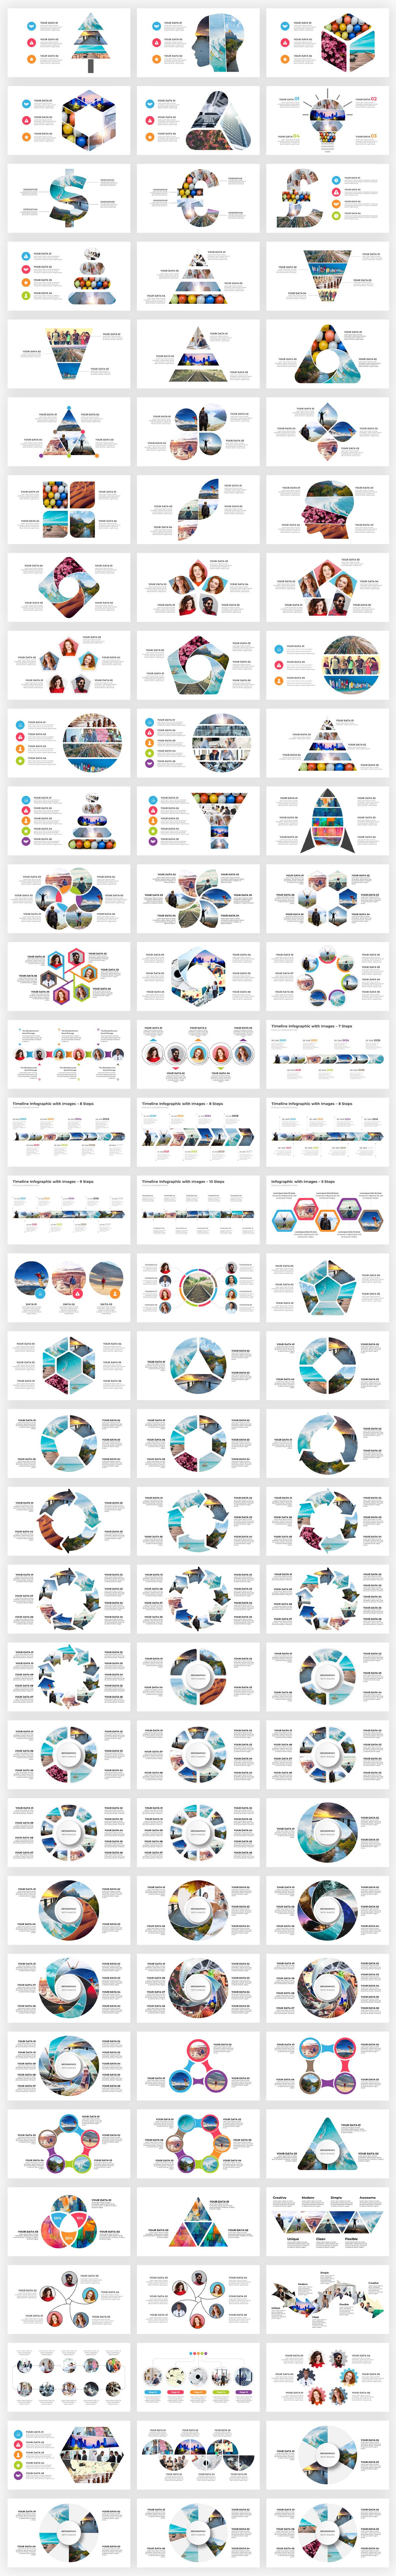 Infographics Complete Bundle PowerPoint Templates - 92